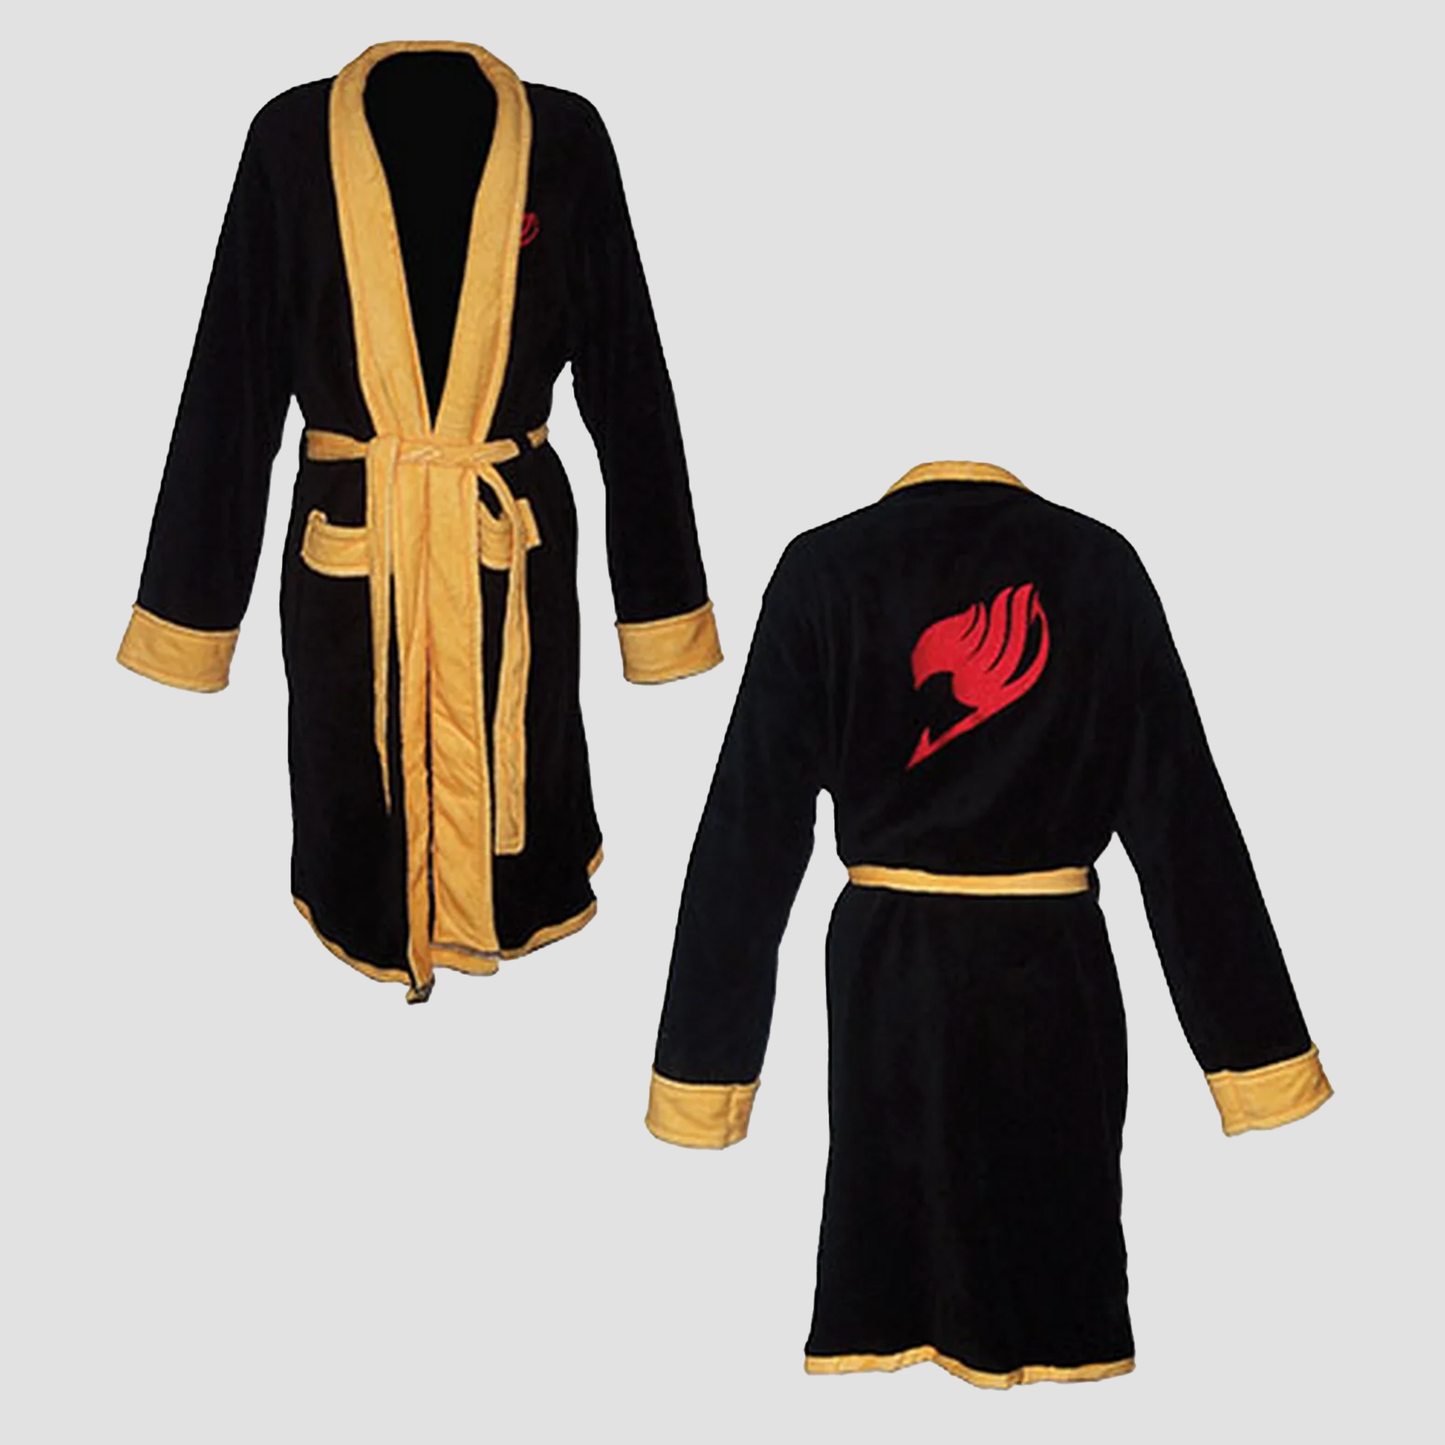 Natsu Dragneel (Fairy Tail) Plush Robe